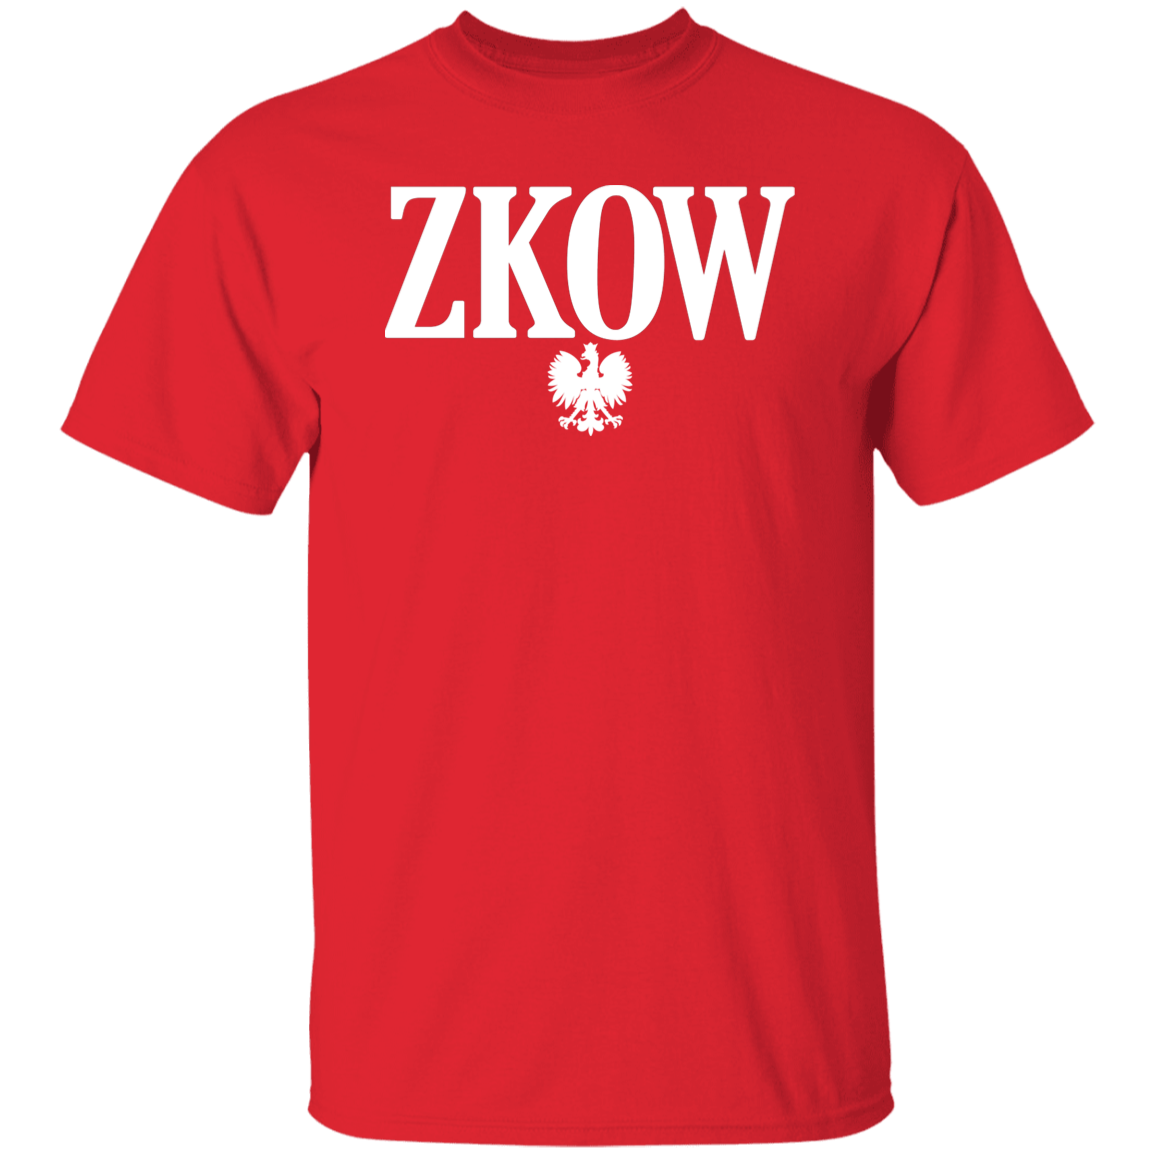 ZKOW Polish Surname Ending Apparel CustomCat G500 5.3 oz. T-Shirt Red S